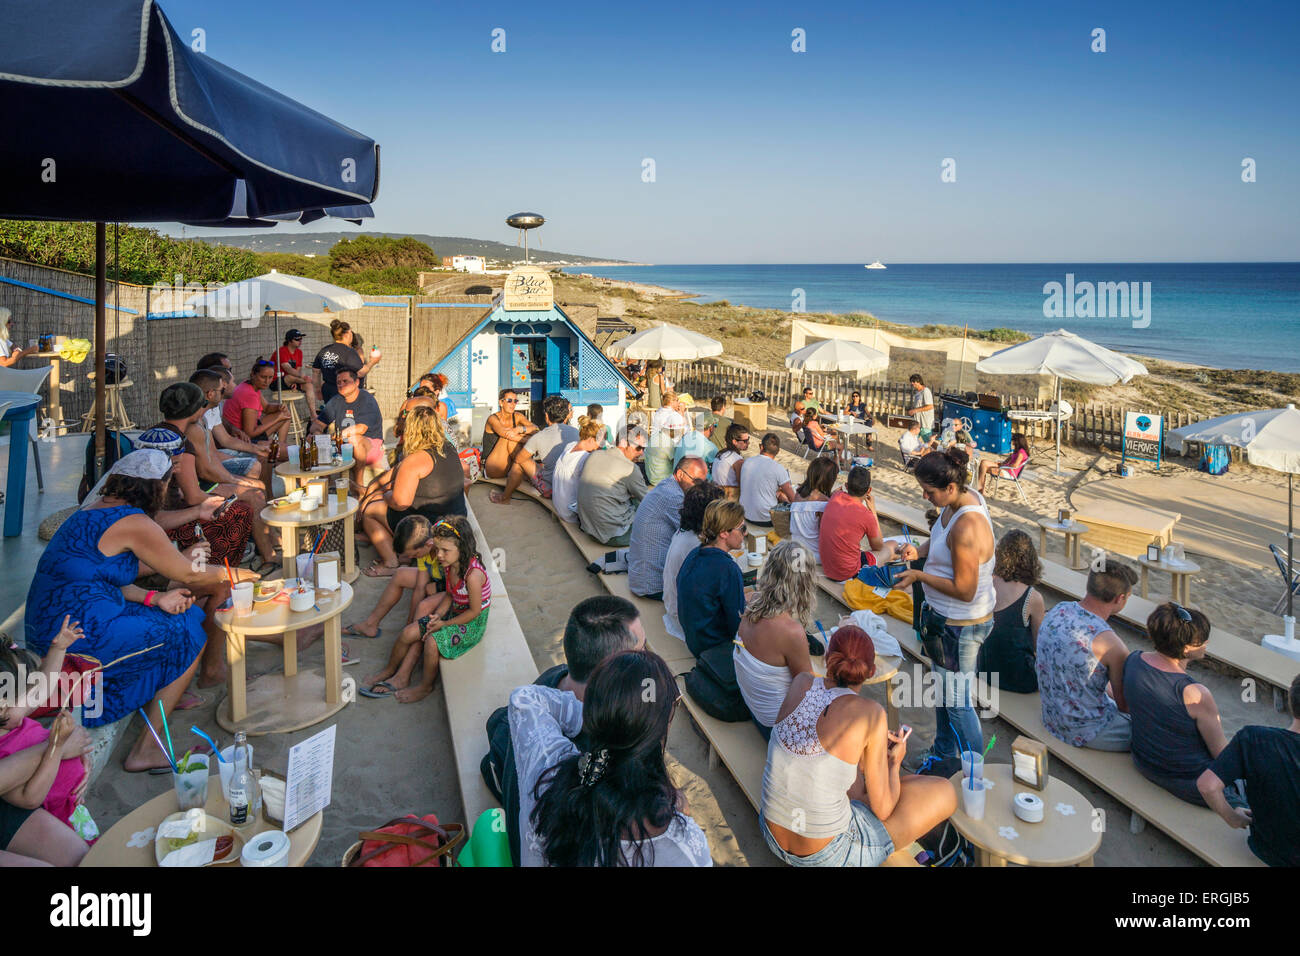 El Blue Bar, Bar en la playa, Formentera, España Foto de stock